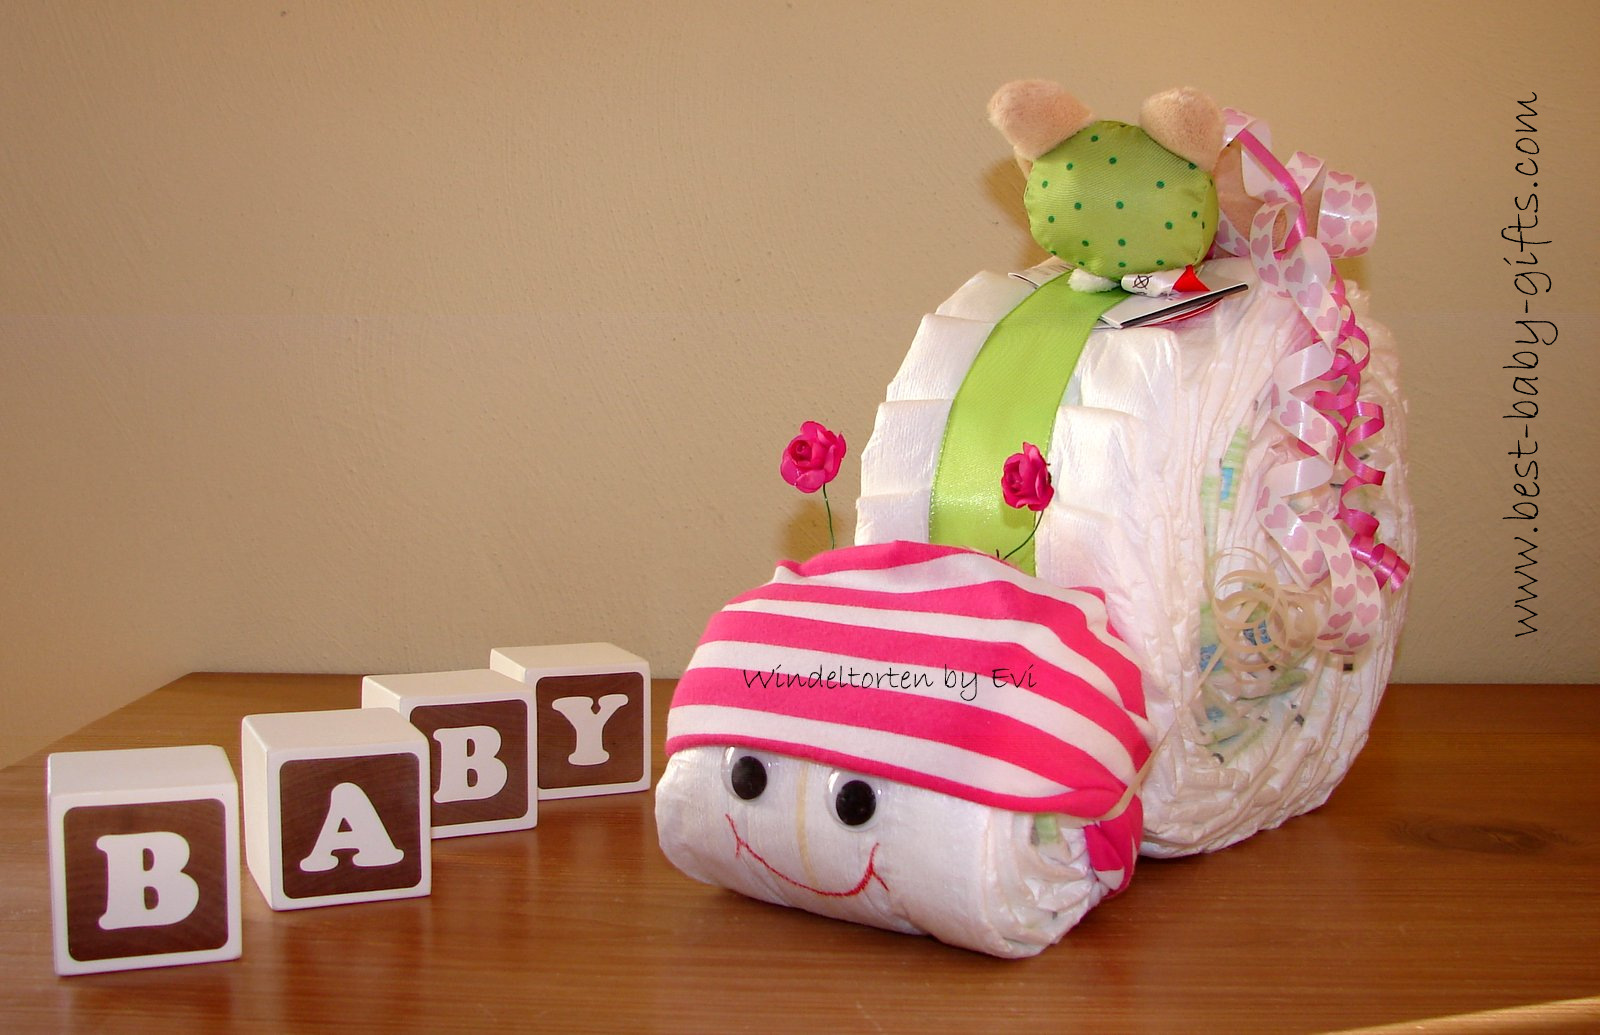 Handmade Baby Gift Ideas - The Idea Room